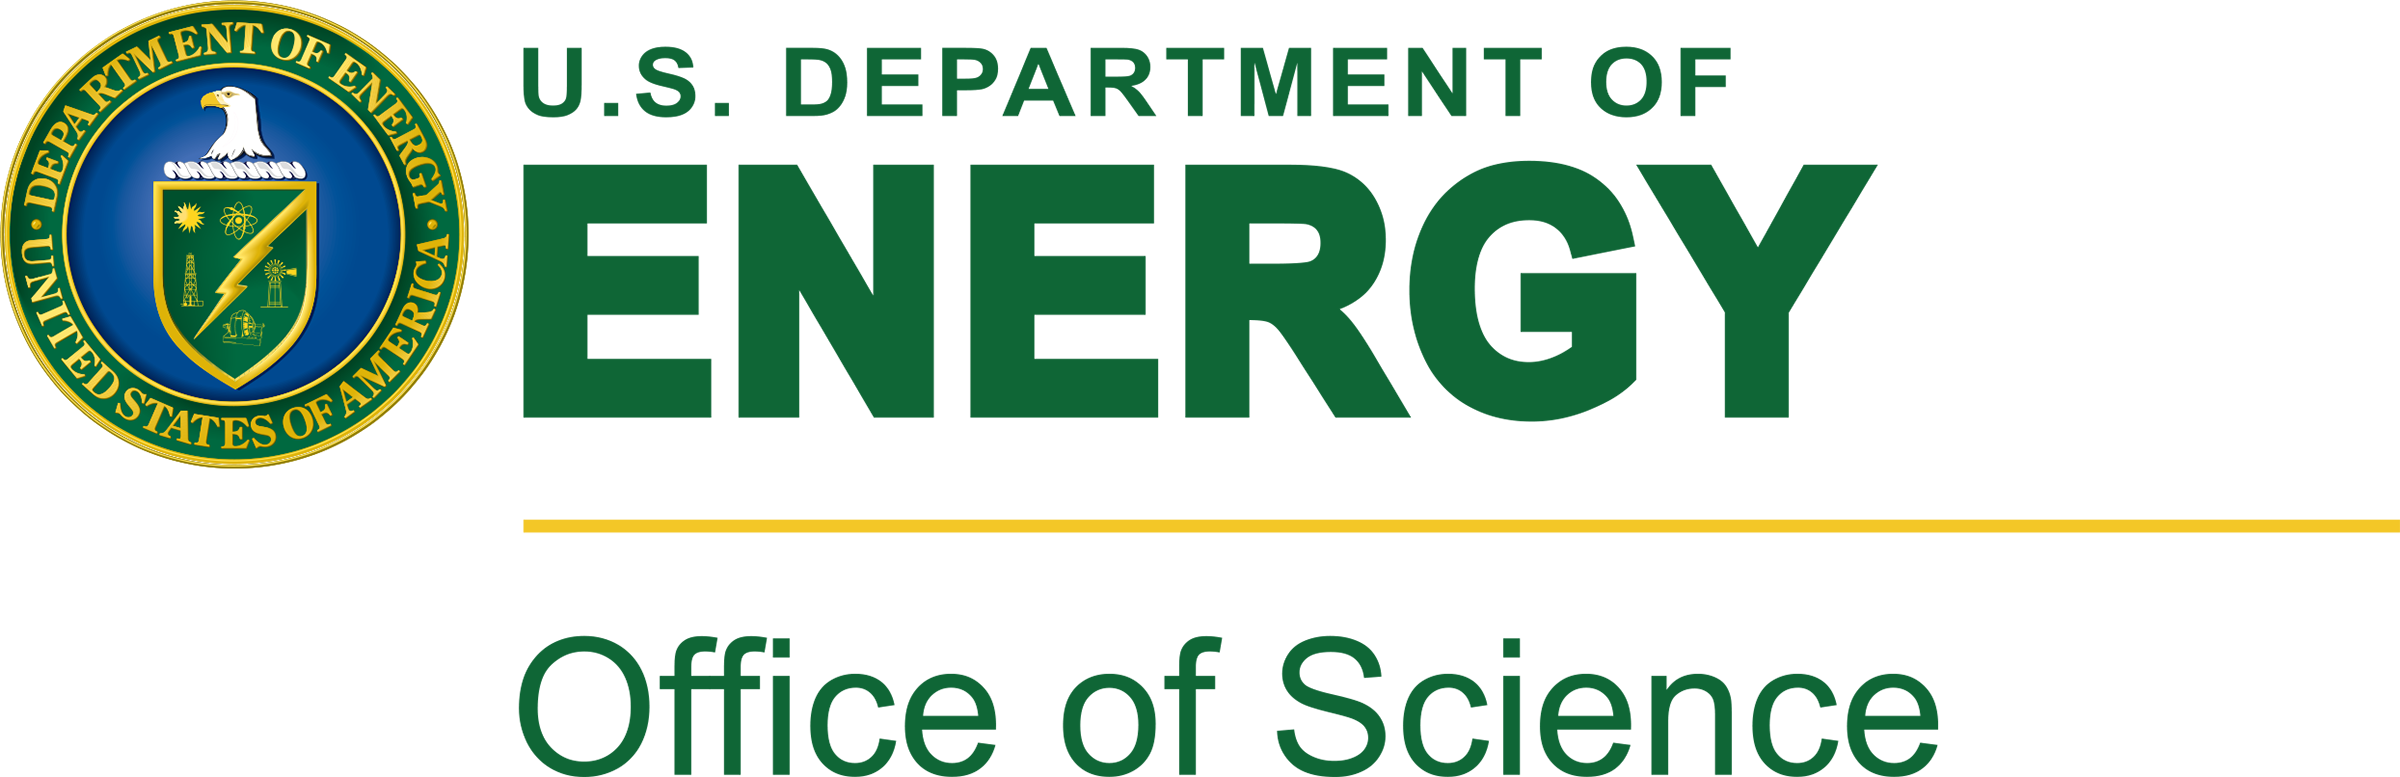 Sam Binton Department Of Energy